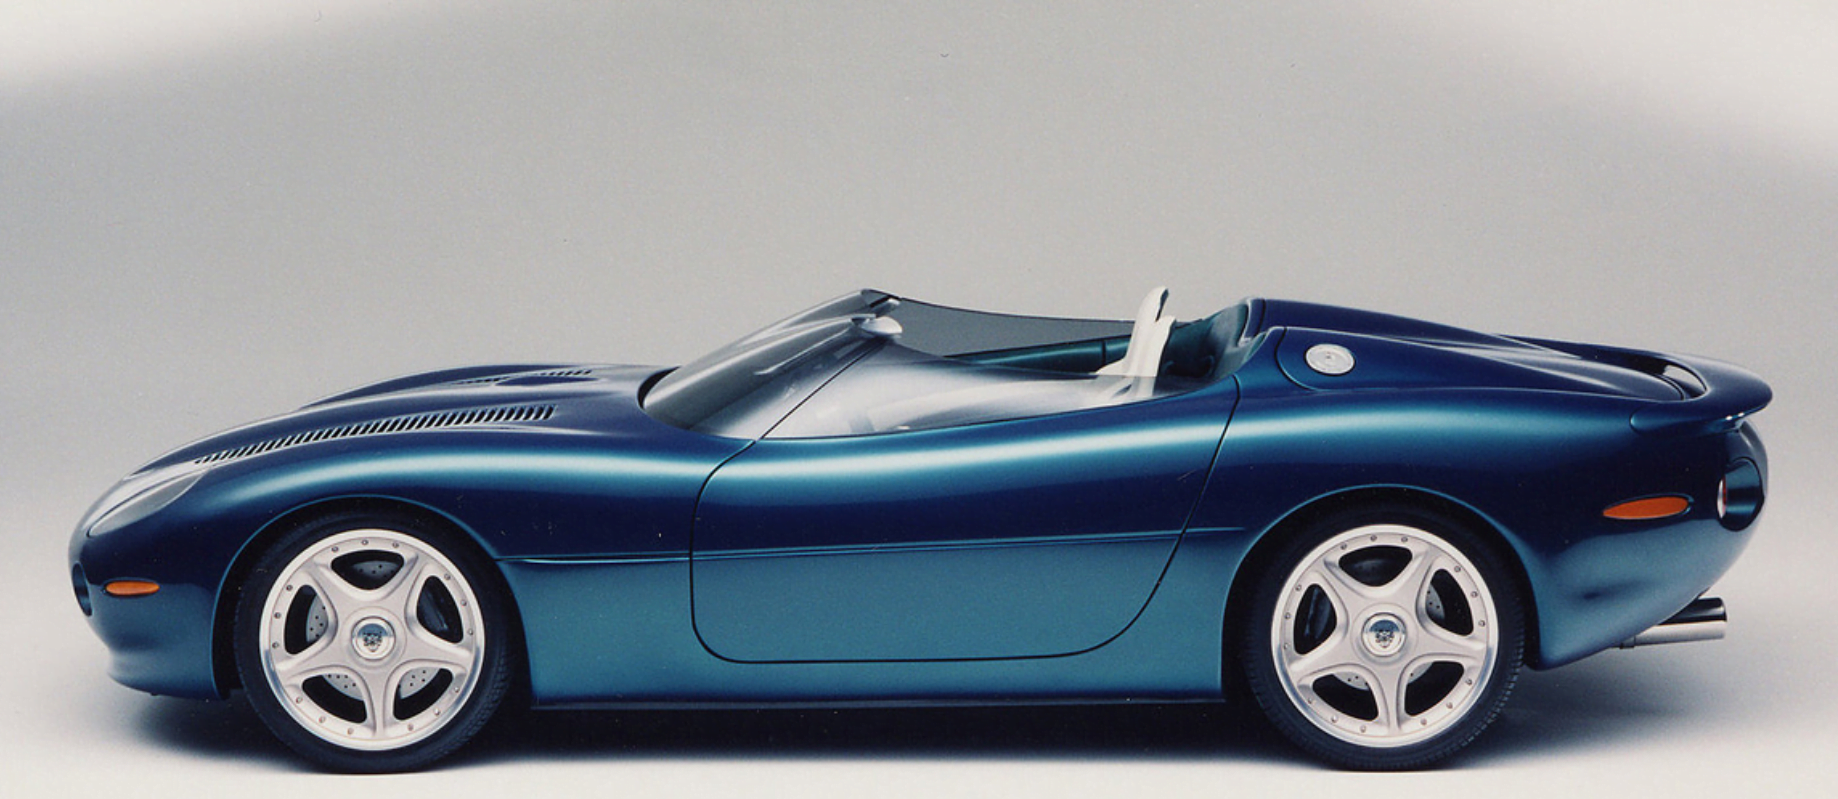 1989-Jaguar-XK180-Concept-Car